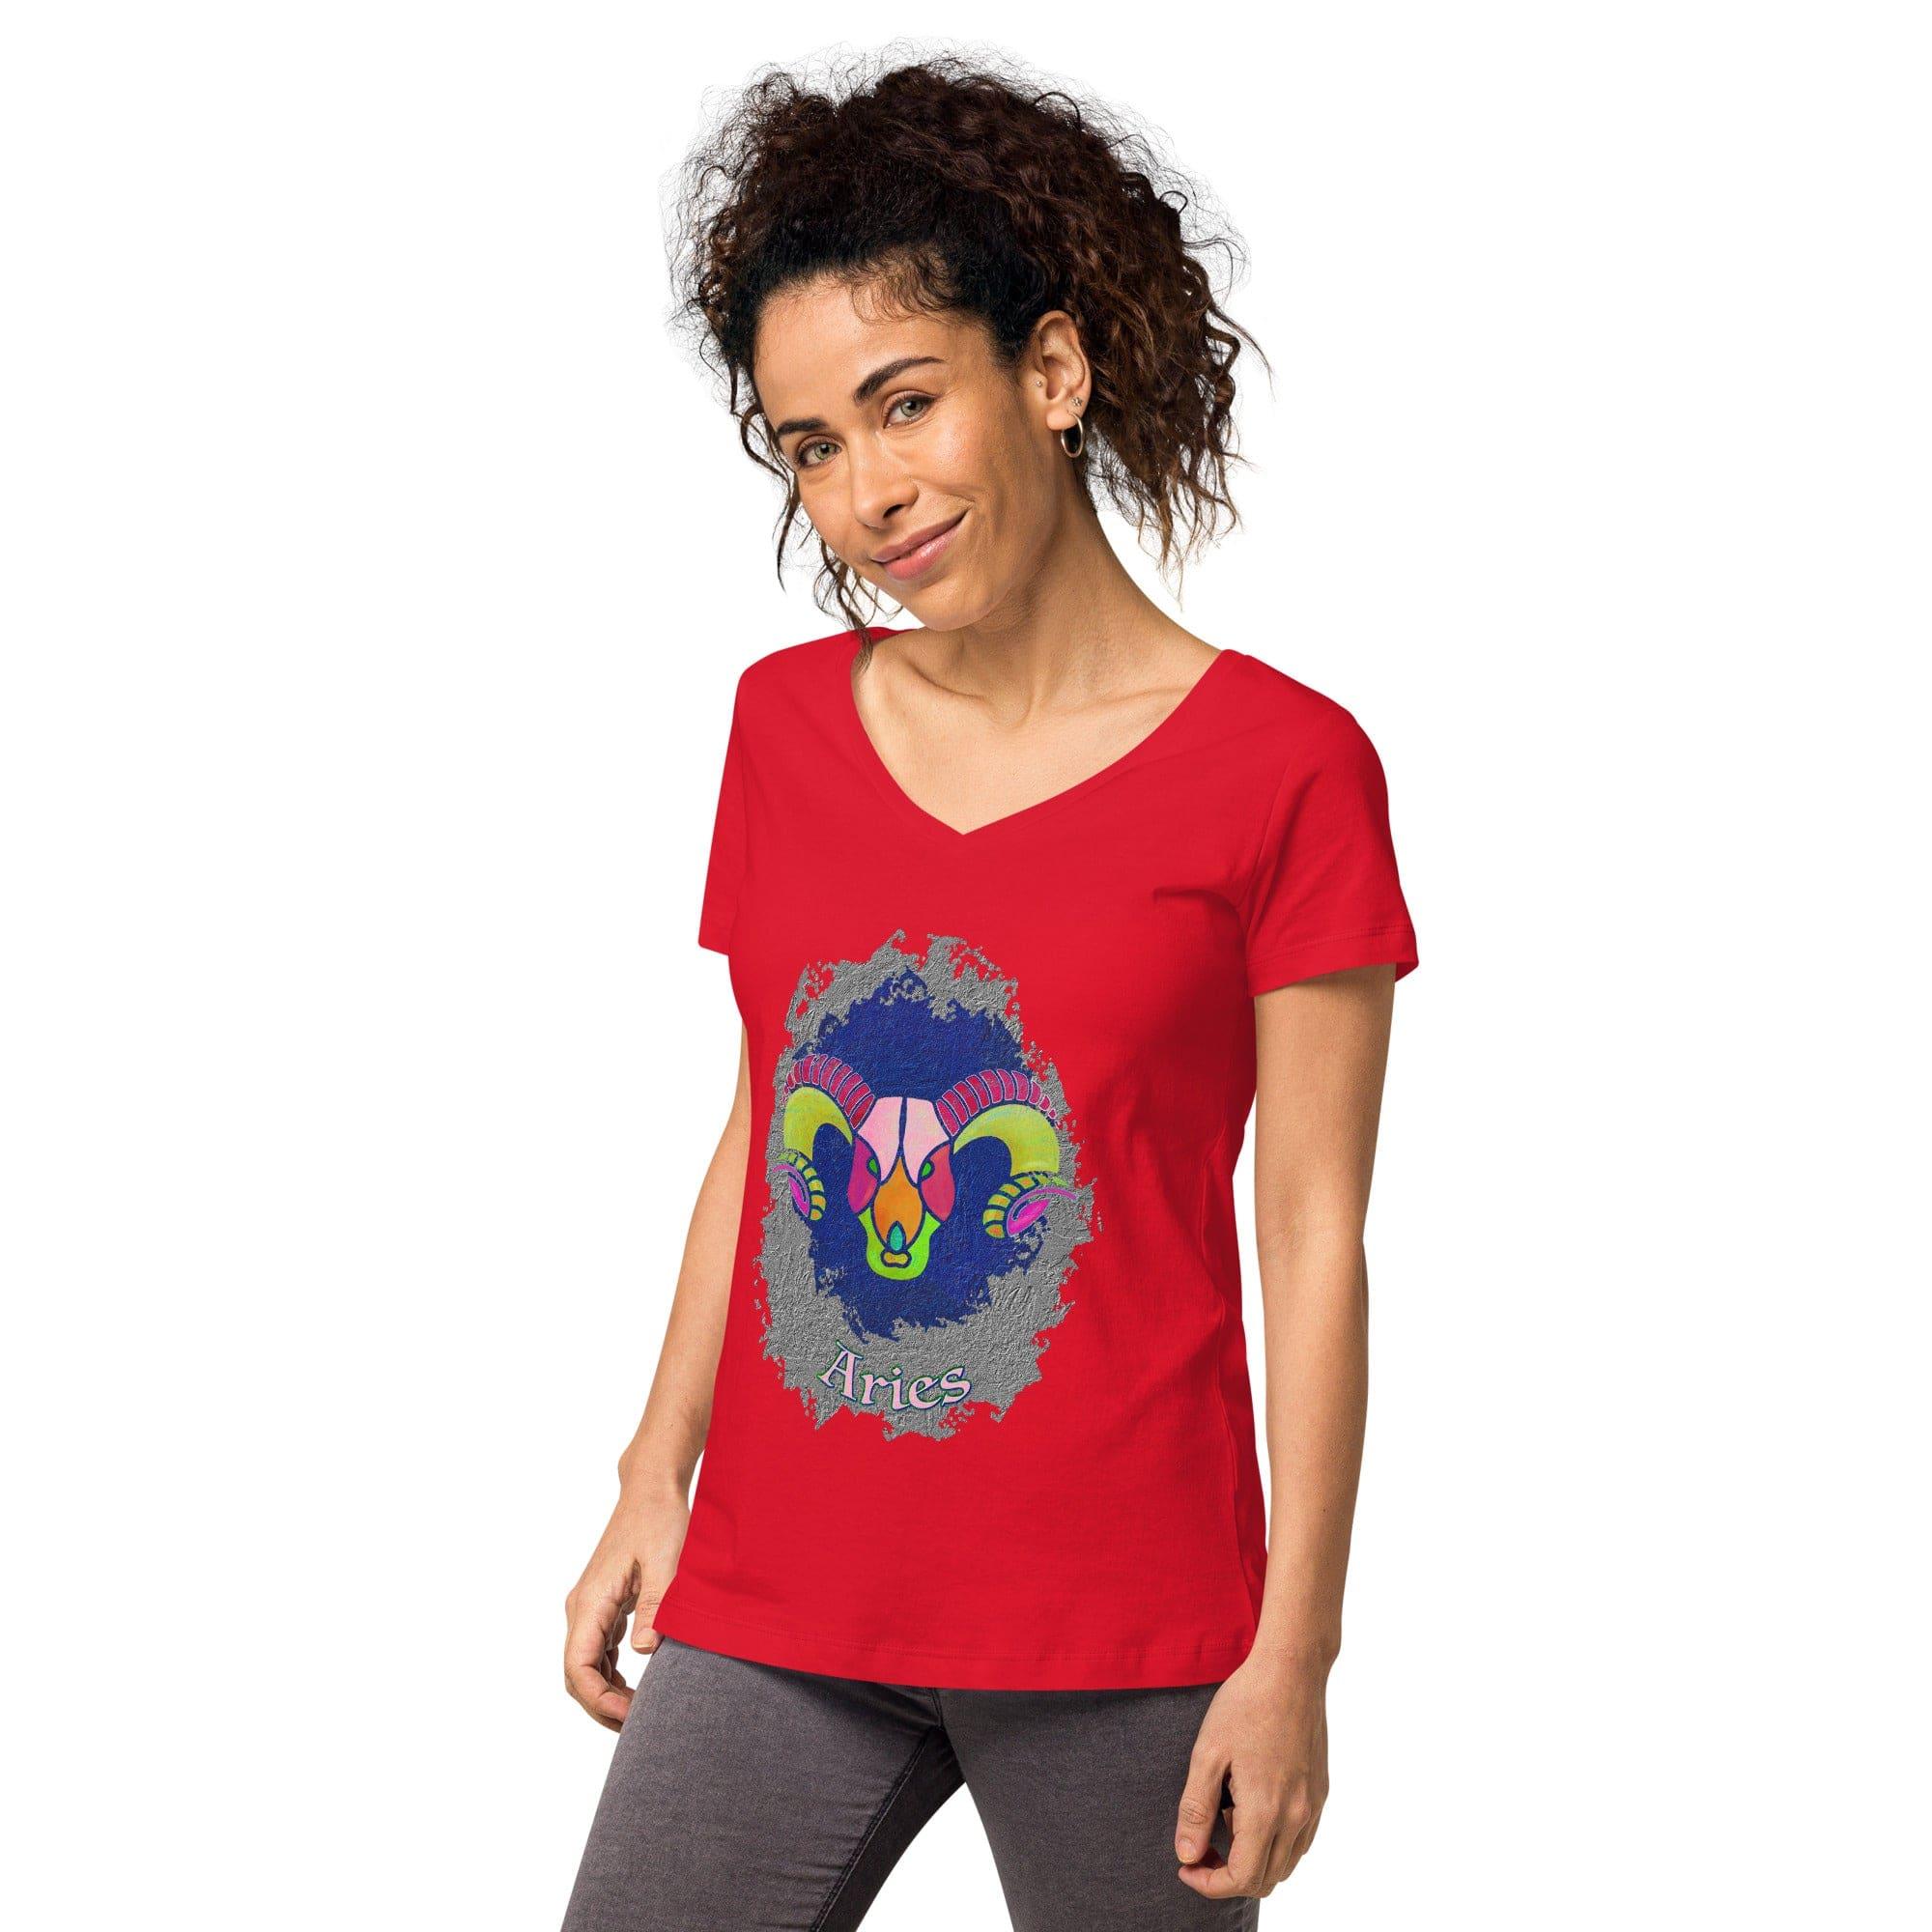 Aries Women’s Fitted V-neck T-shirt | Zodiac Series 11 - Beyond T-shirts